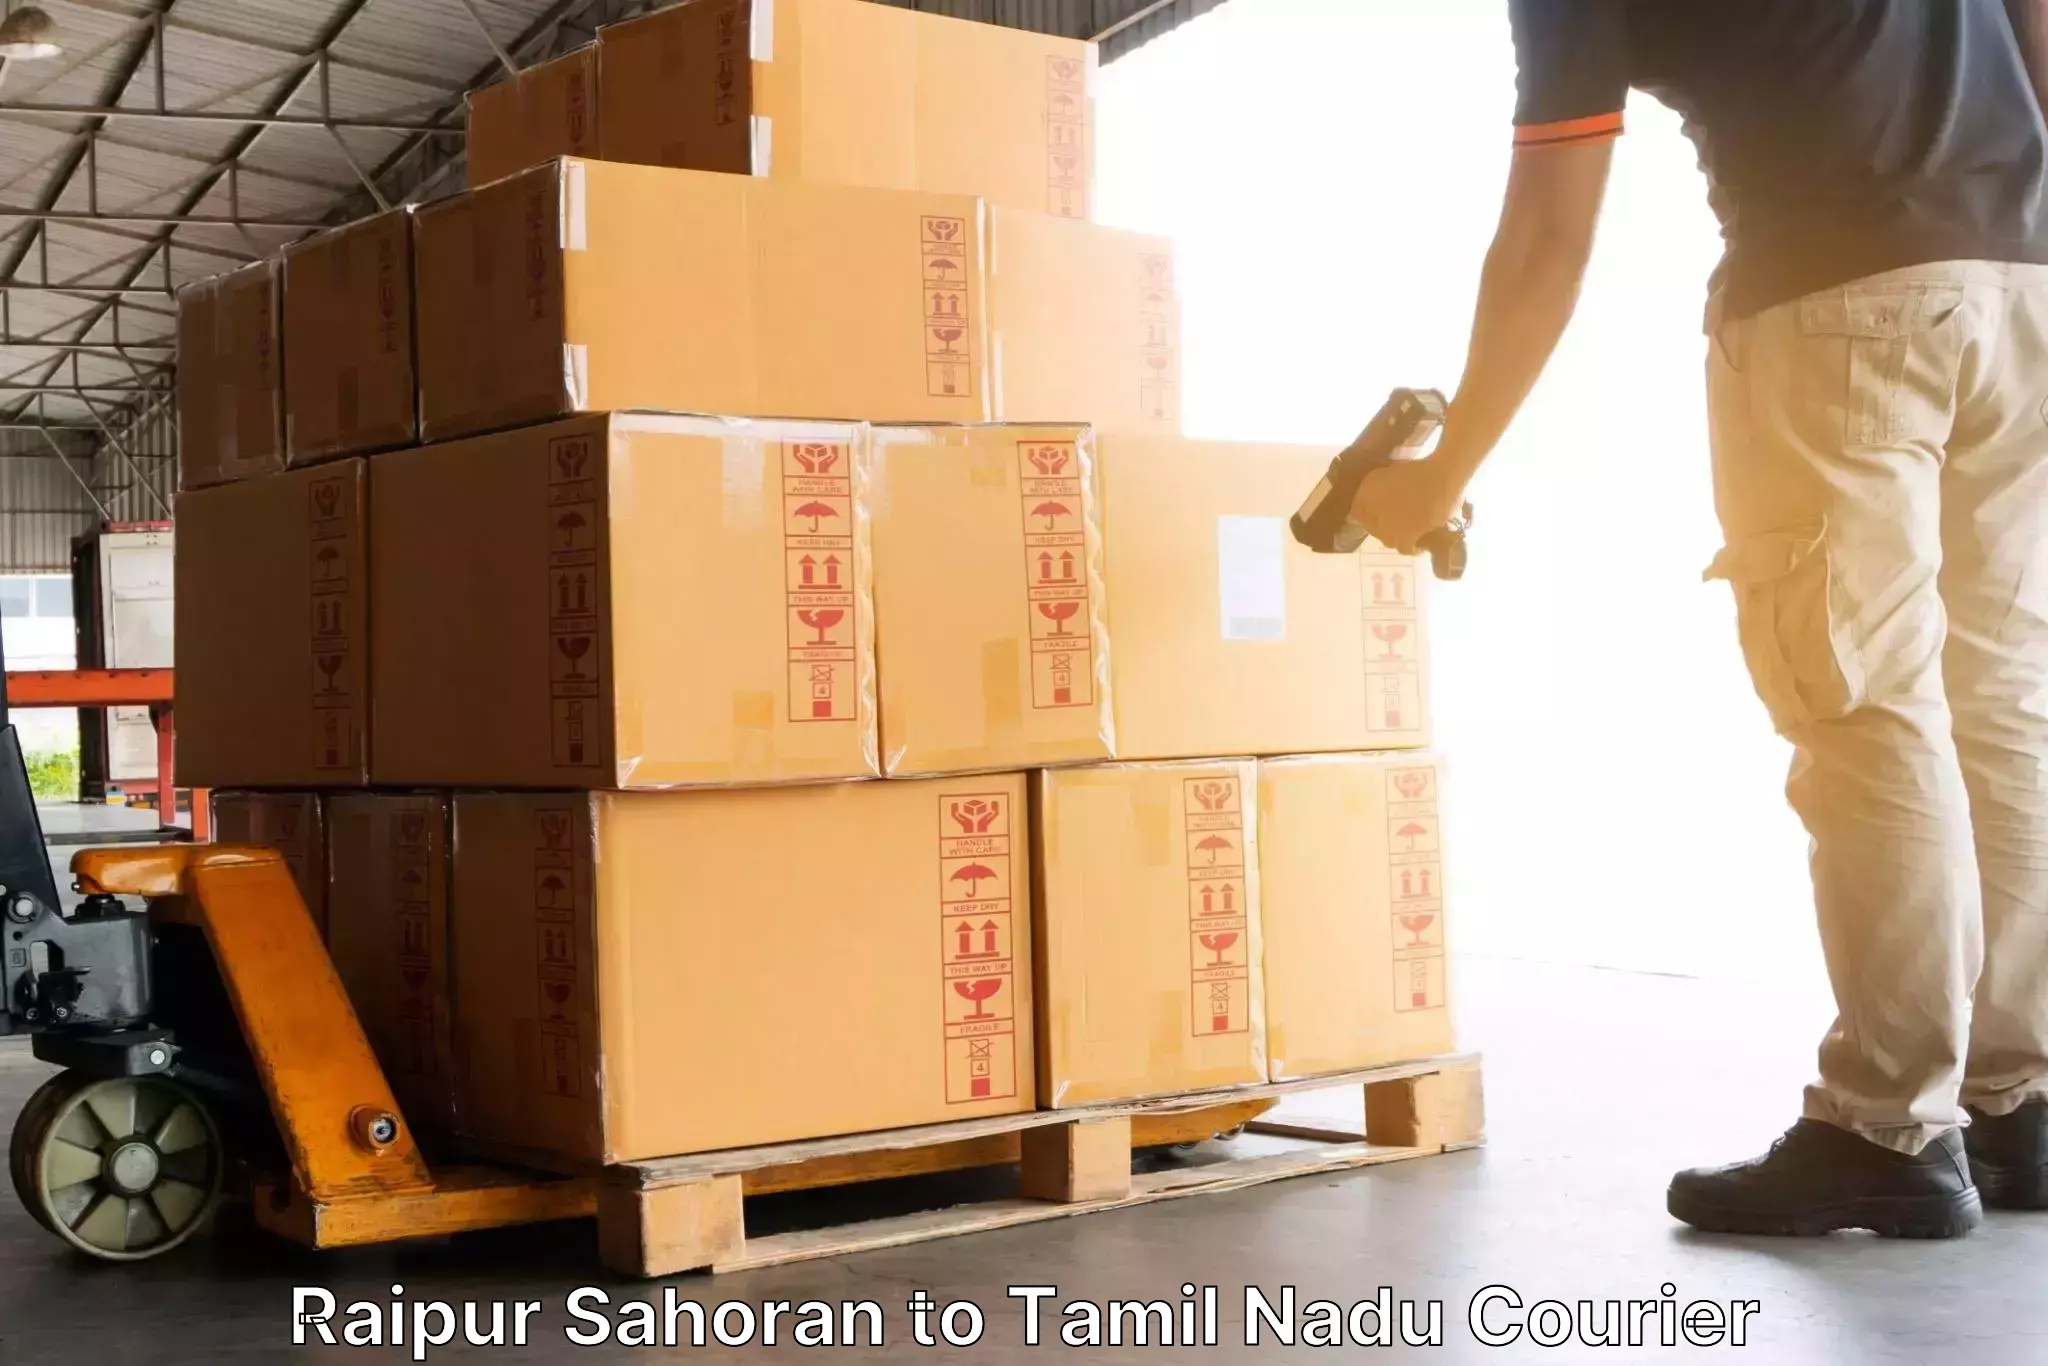 Courier insurance Raipur Sahoran to Attur